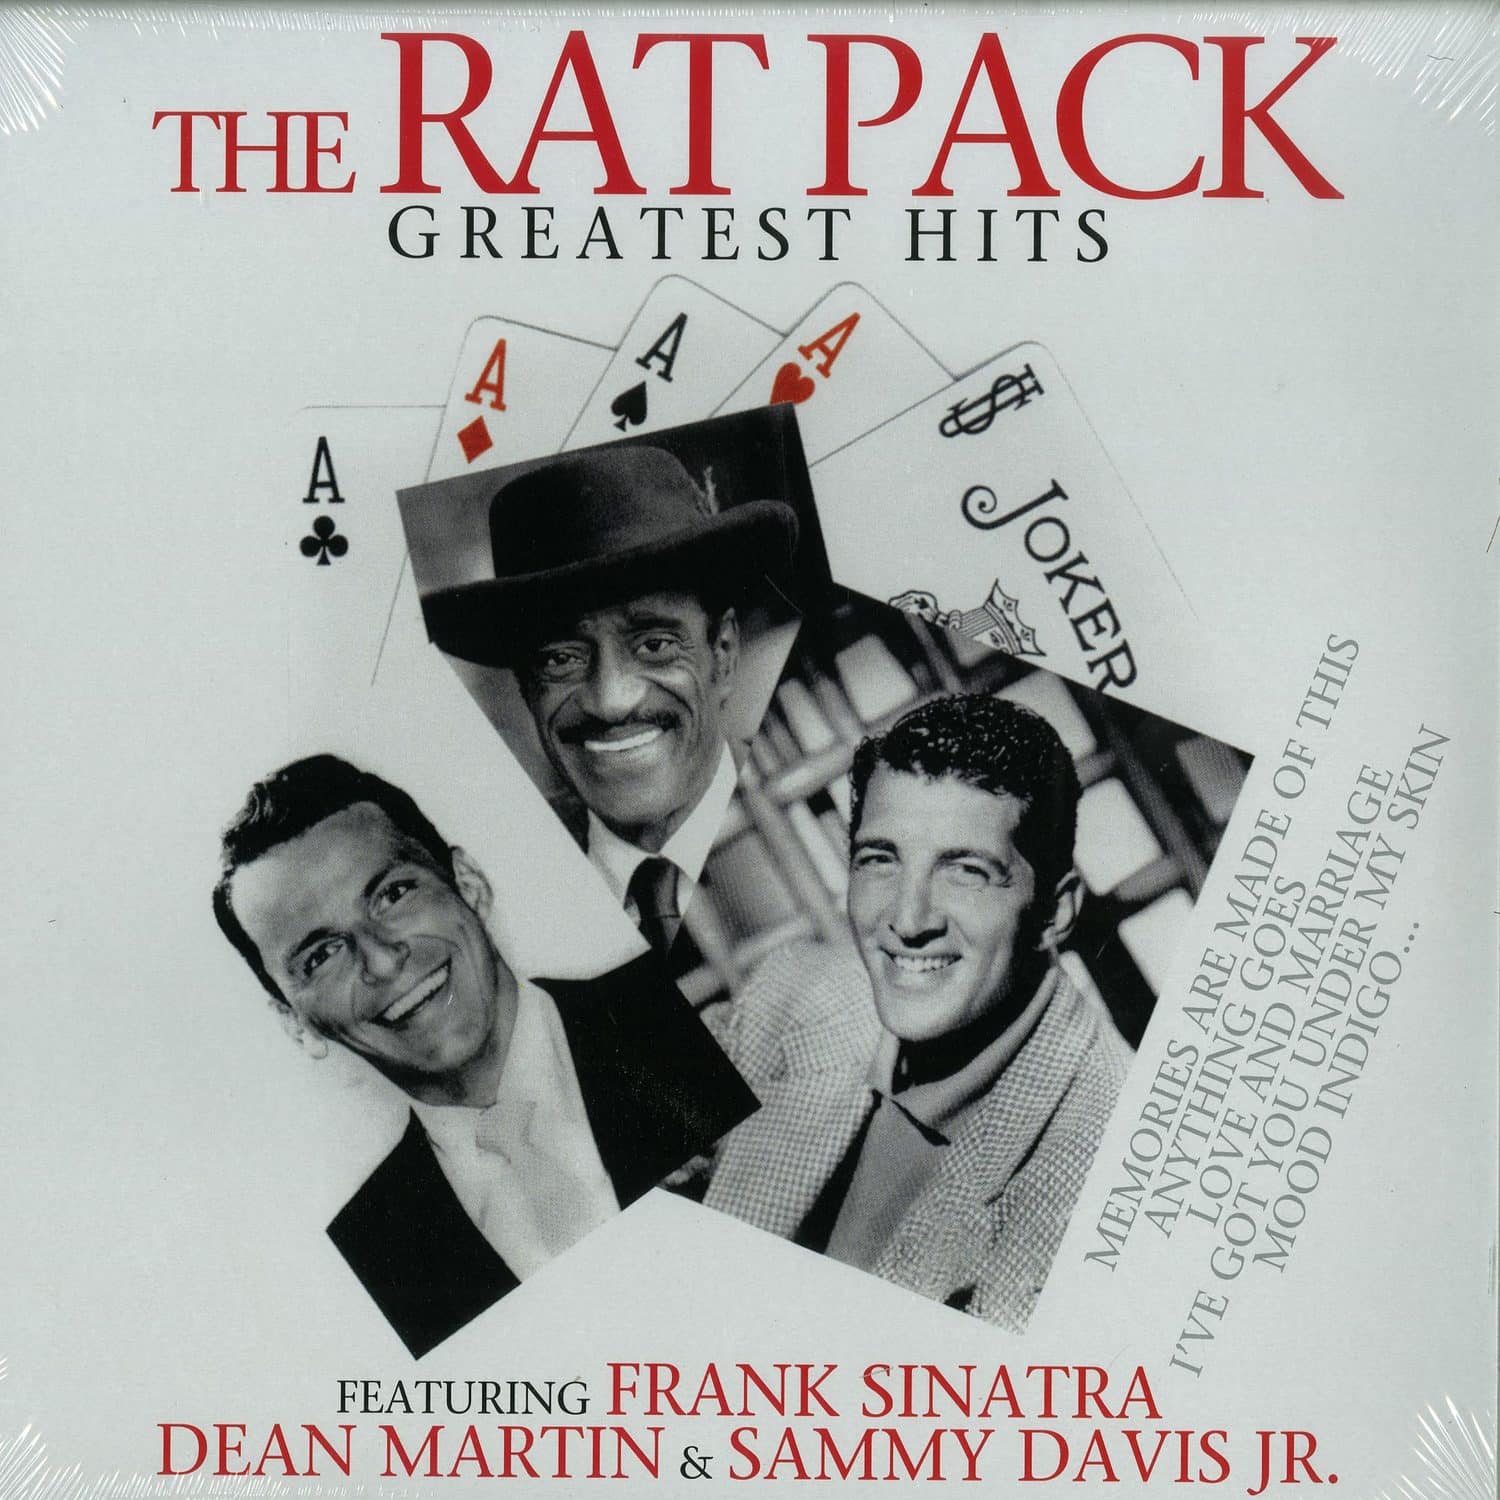 Frank Sinatra, Dean Martin & Sammy Davis Jr. - THE RATPACK: GREATEST HITS 